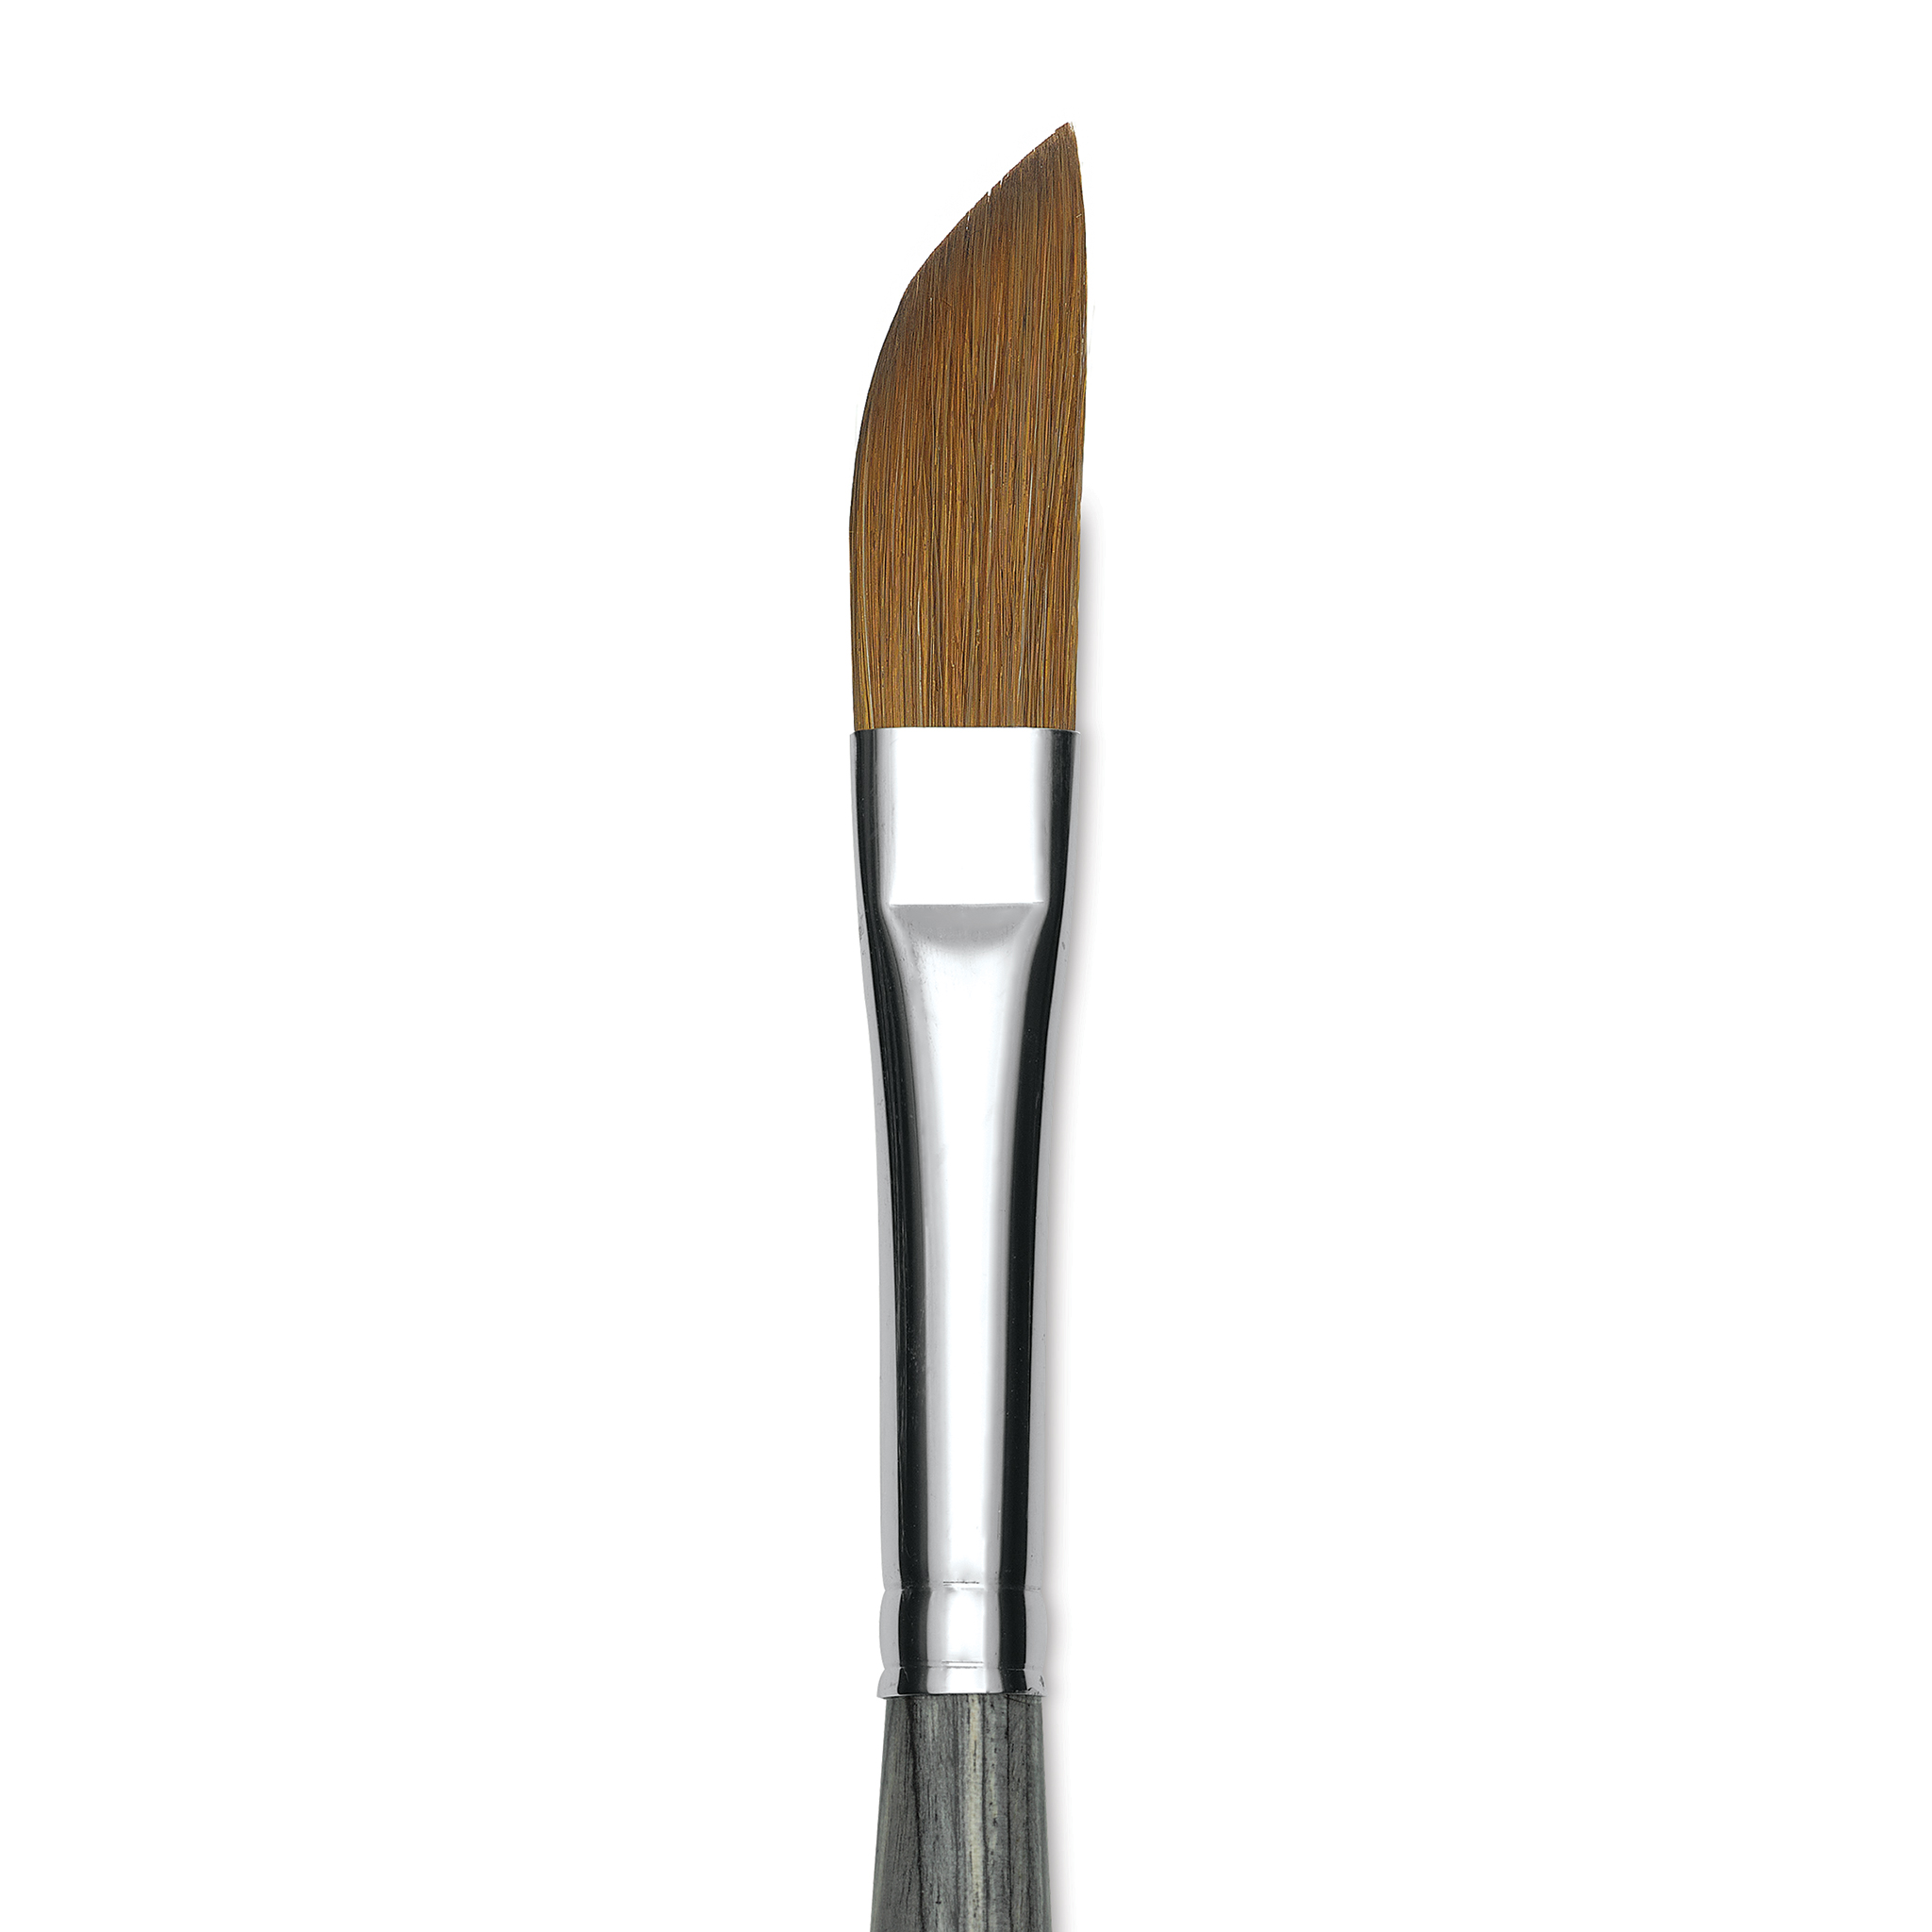 Da Vinci : Colineo : Synthetic Sable Watercolour Brushes : 422 / 1222 /  5522 / 5527 / 5822 - Da Vinci : Colineo - Da Vinci - Brands